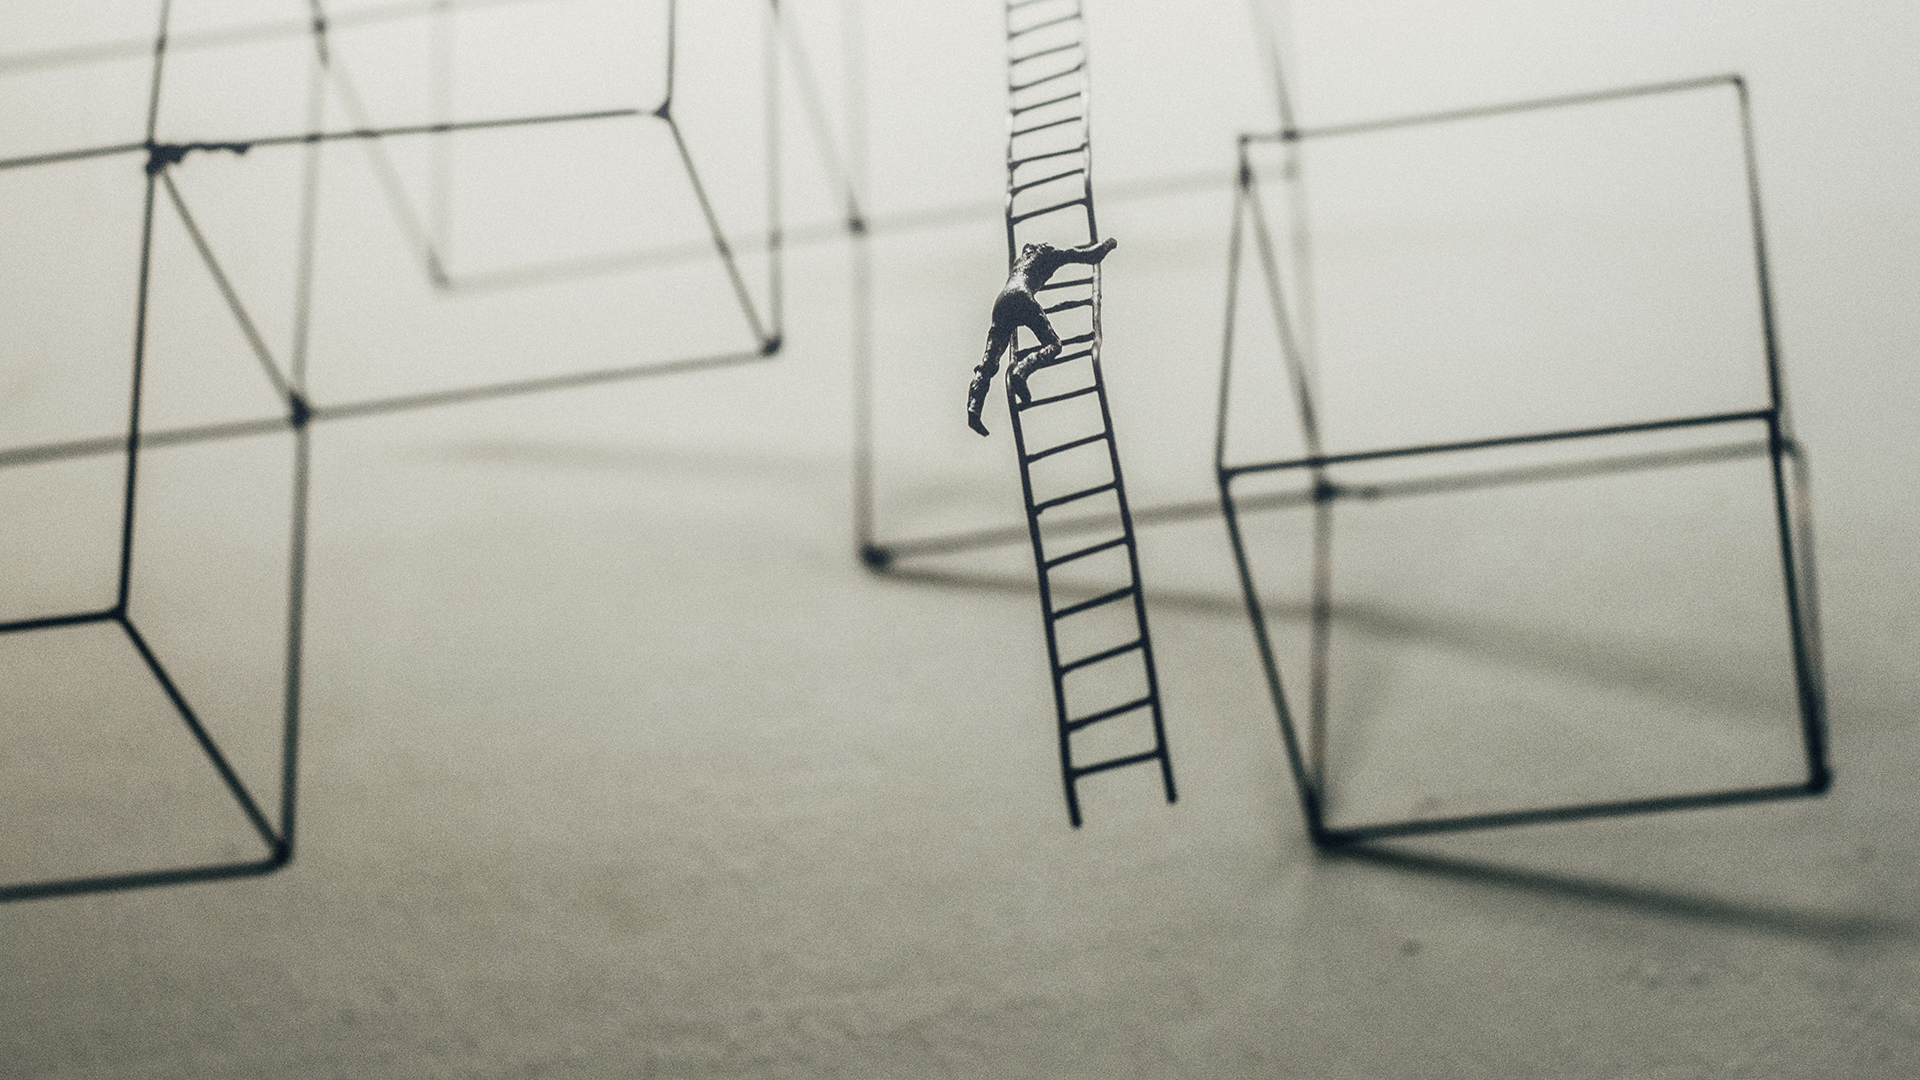 Metal framework art depicting man climbing a suspended ladder (Jason Wong - unsplash.com)